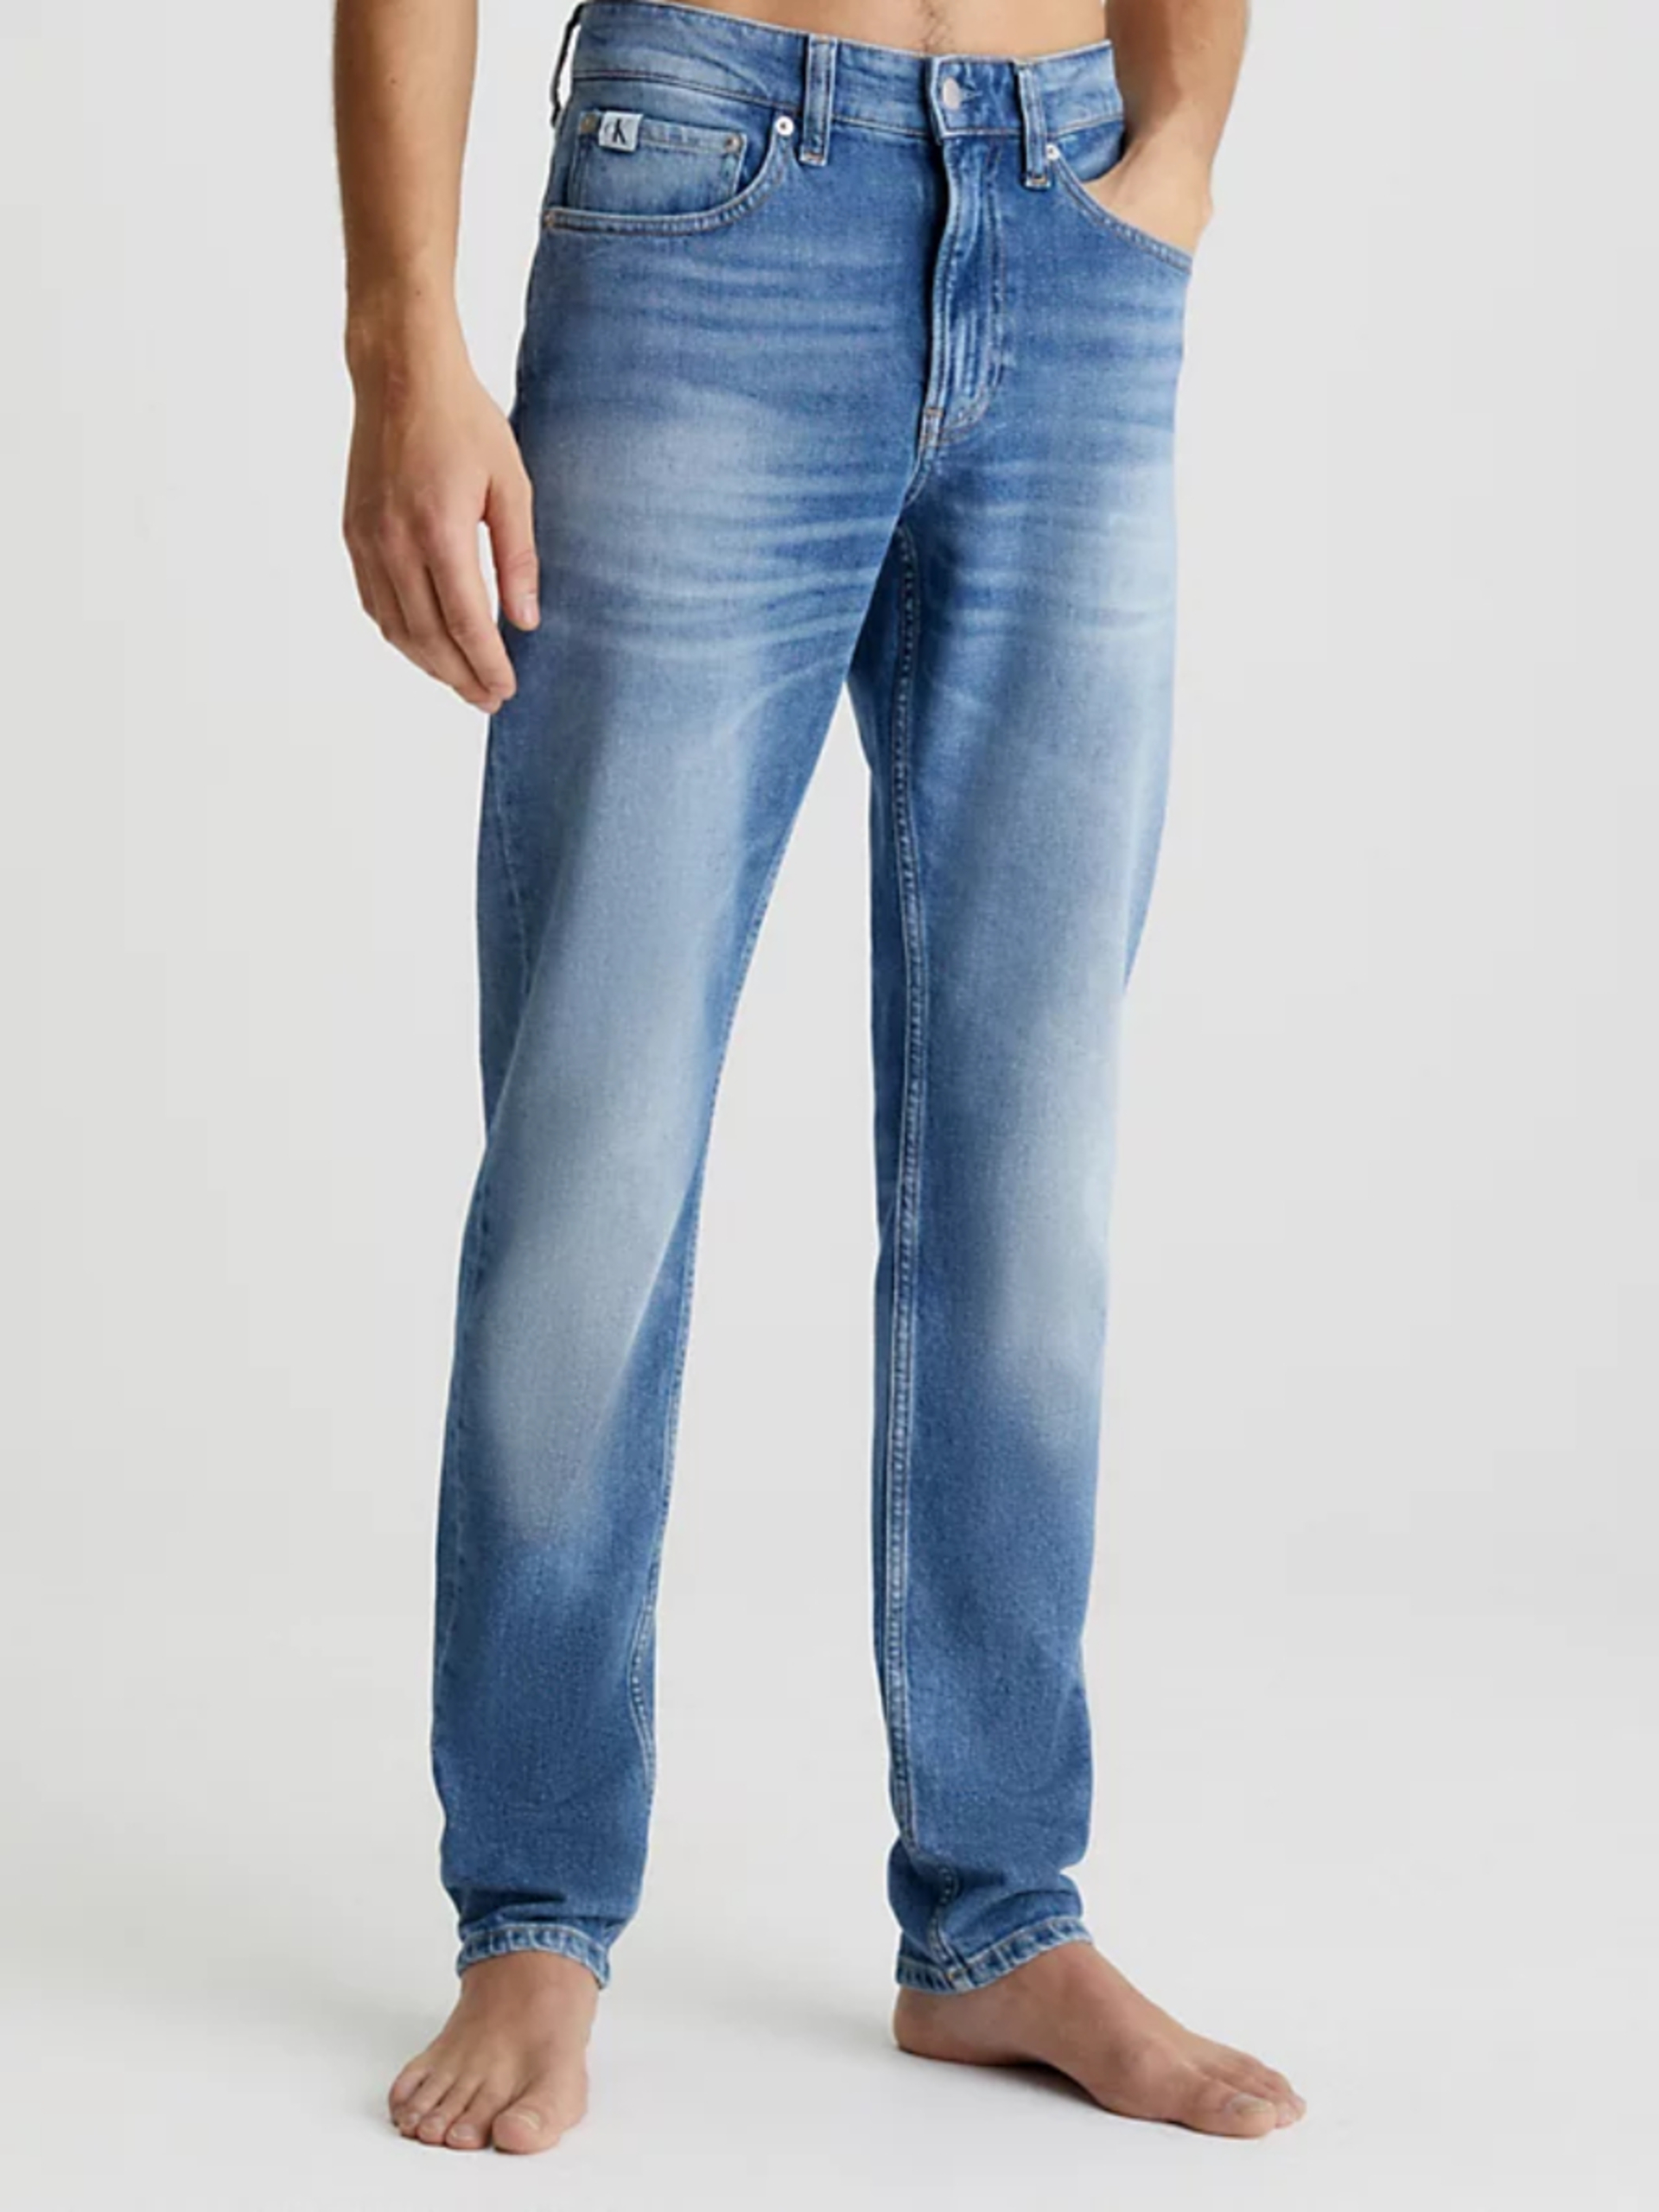 Calvin Klein pánské modré džíny SLIM TAPER - 34/32 (1A4)